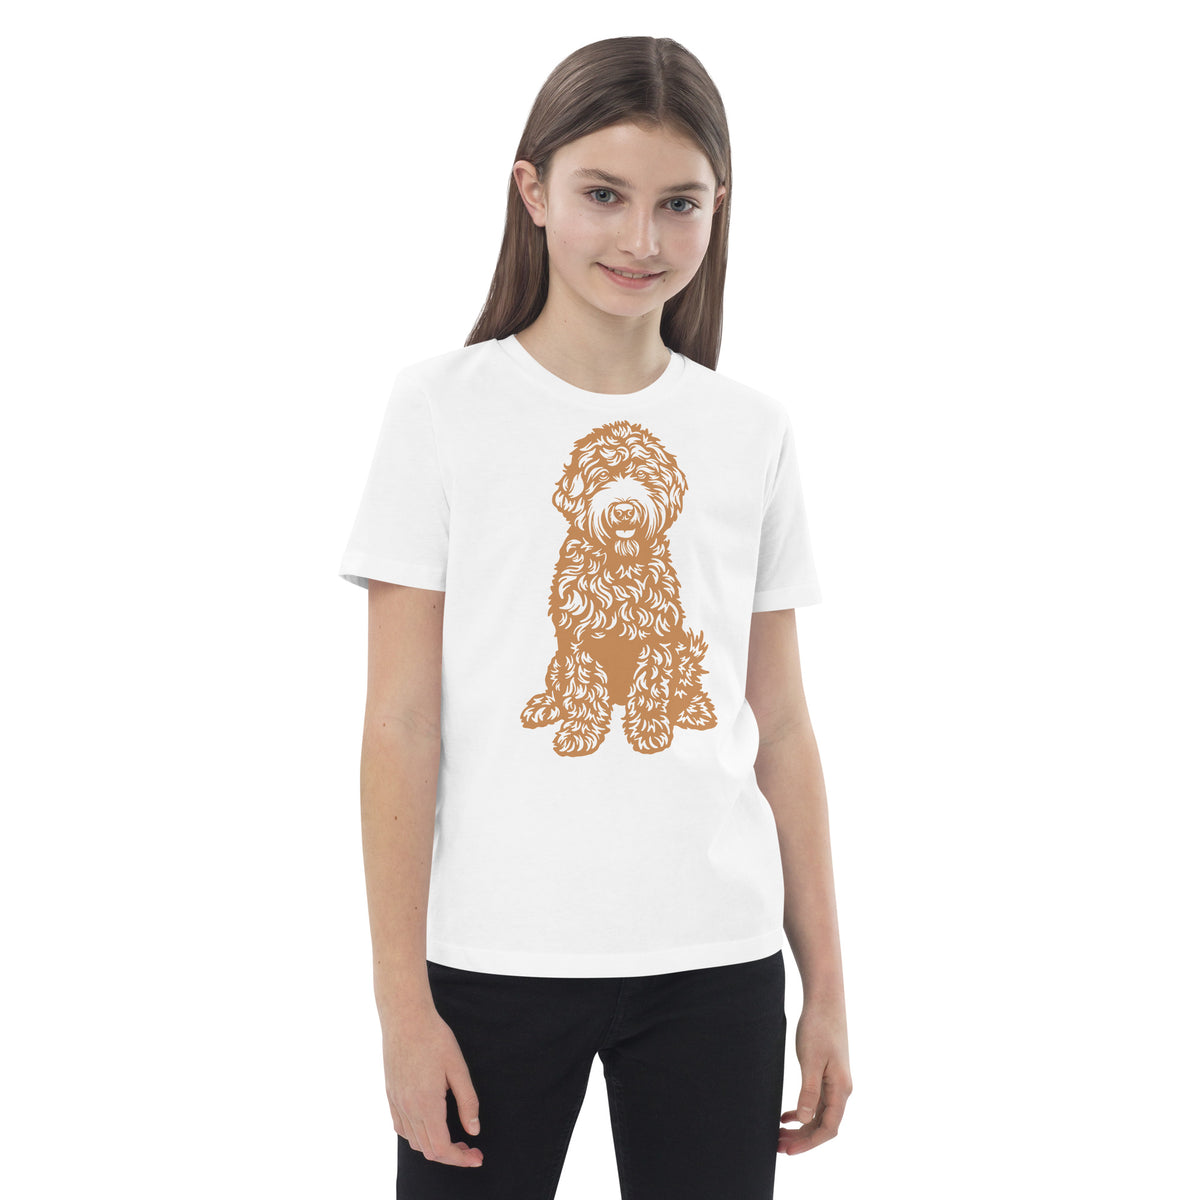 Labradoodle-T-Shirt für Kinder